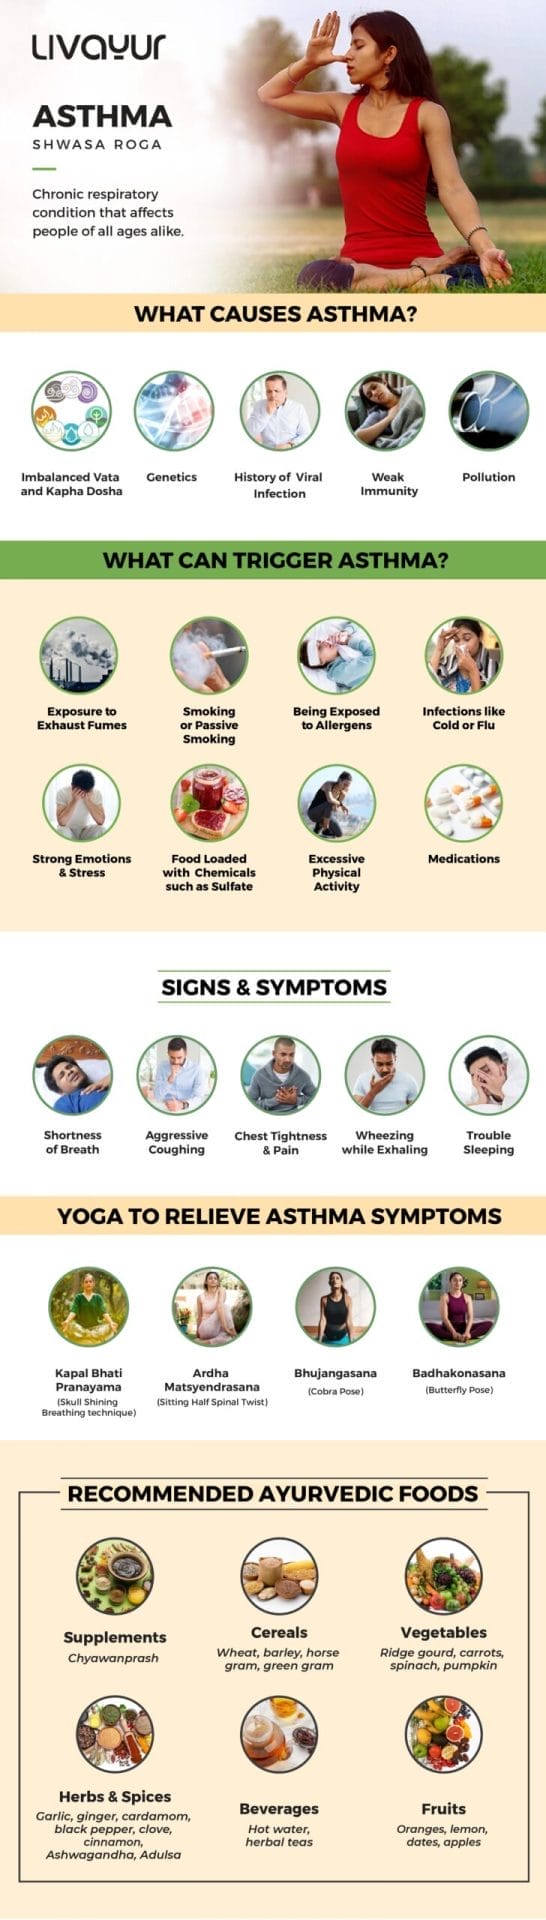 Asthma Shwasa Roga